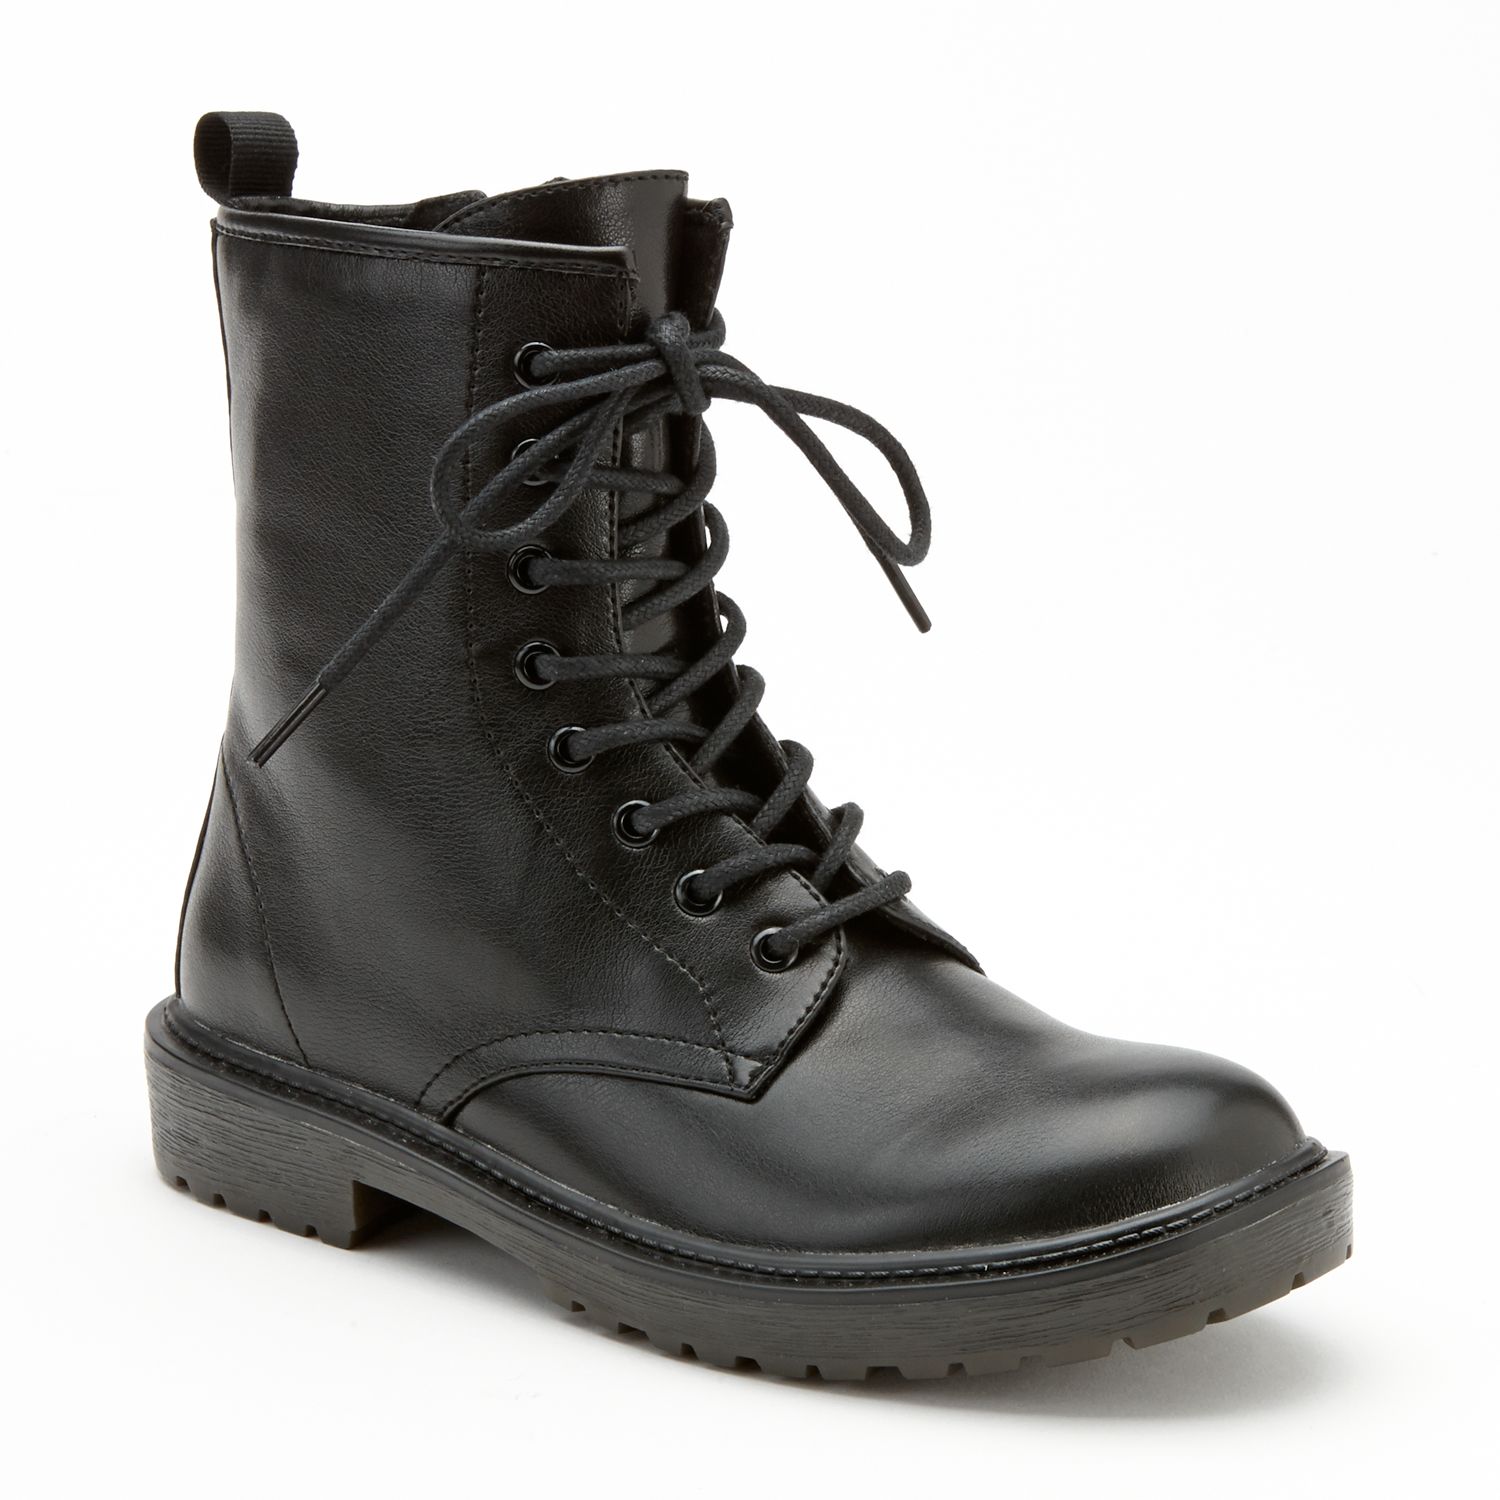 mudd combat boots